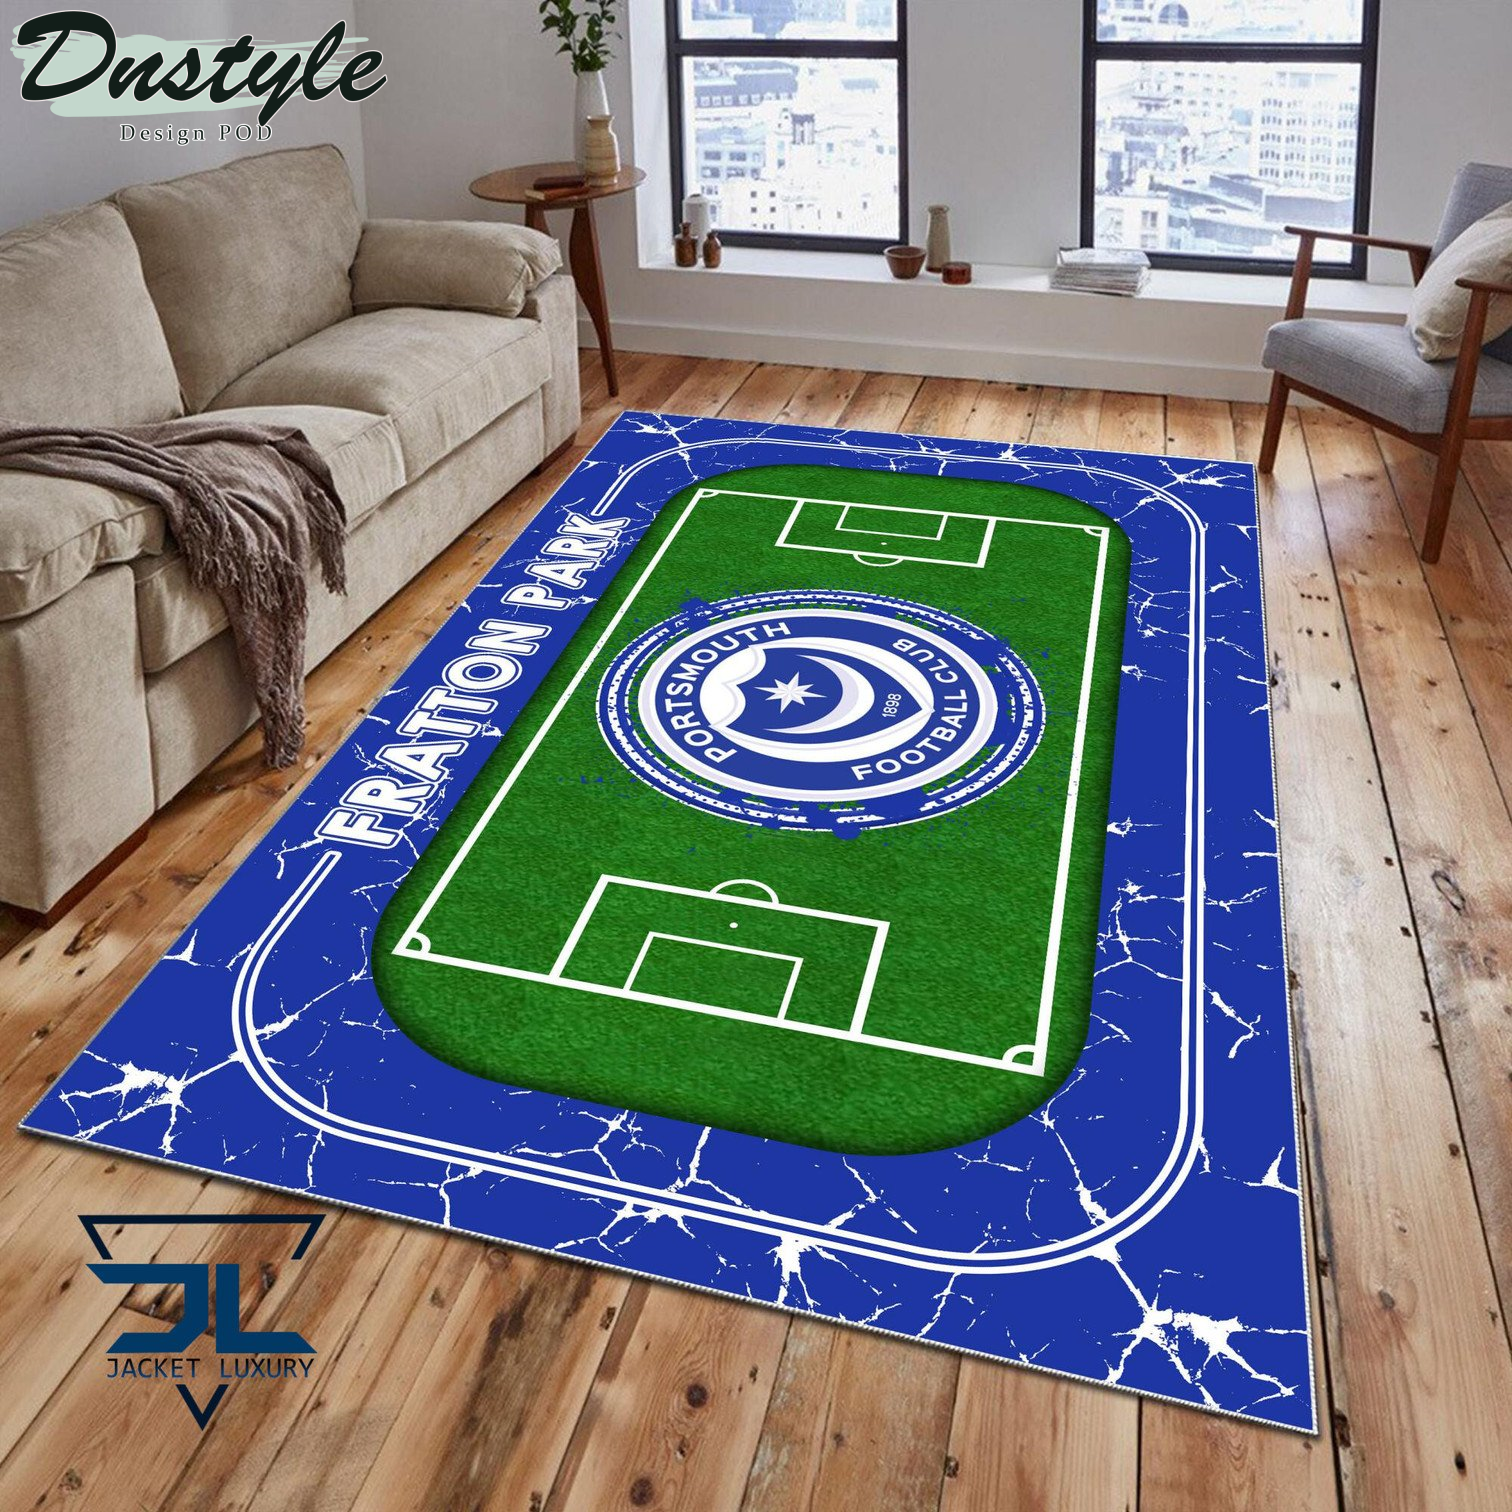 Oxford United F.C Rug Carpet